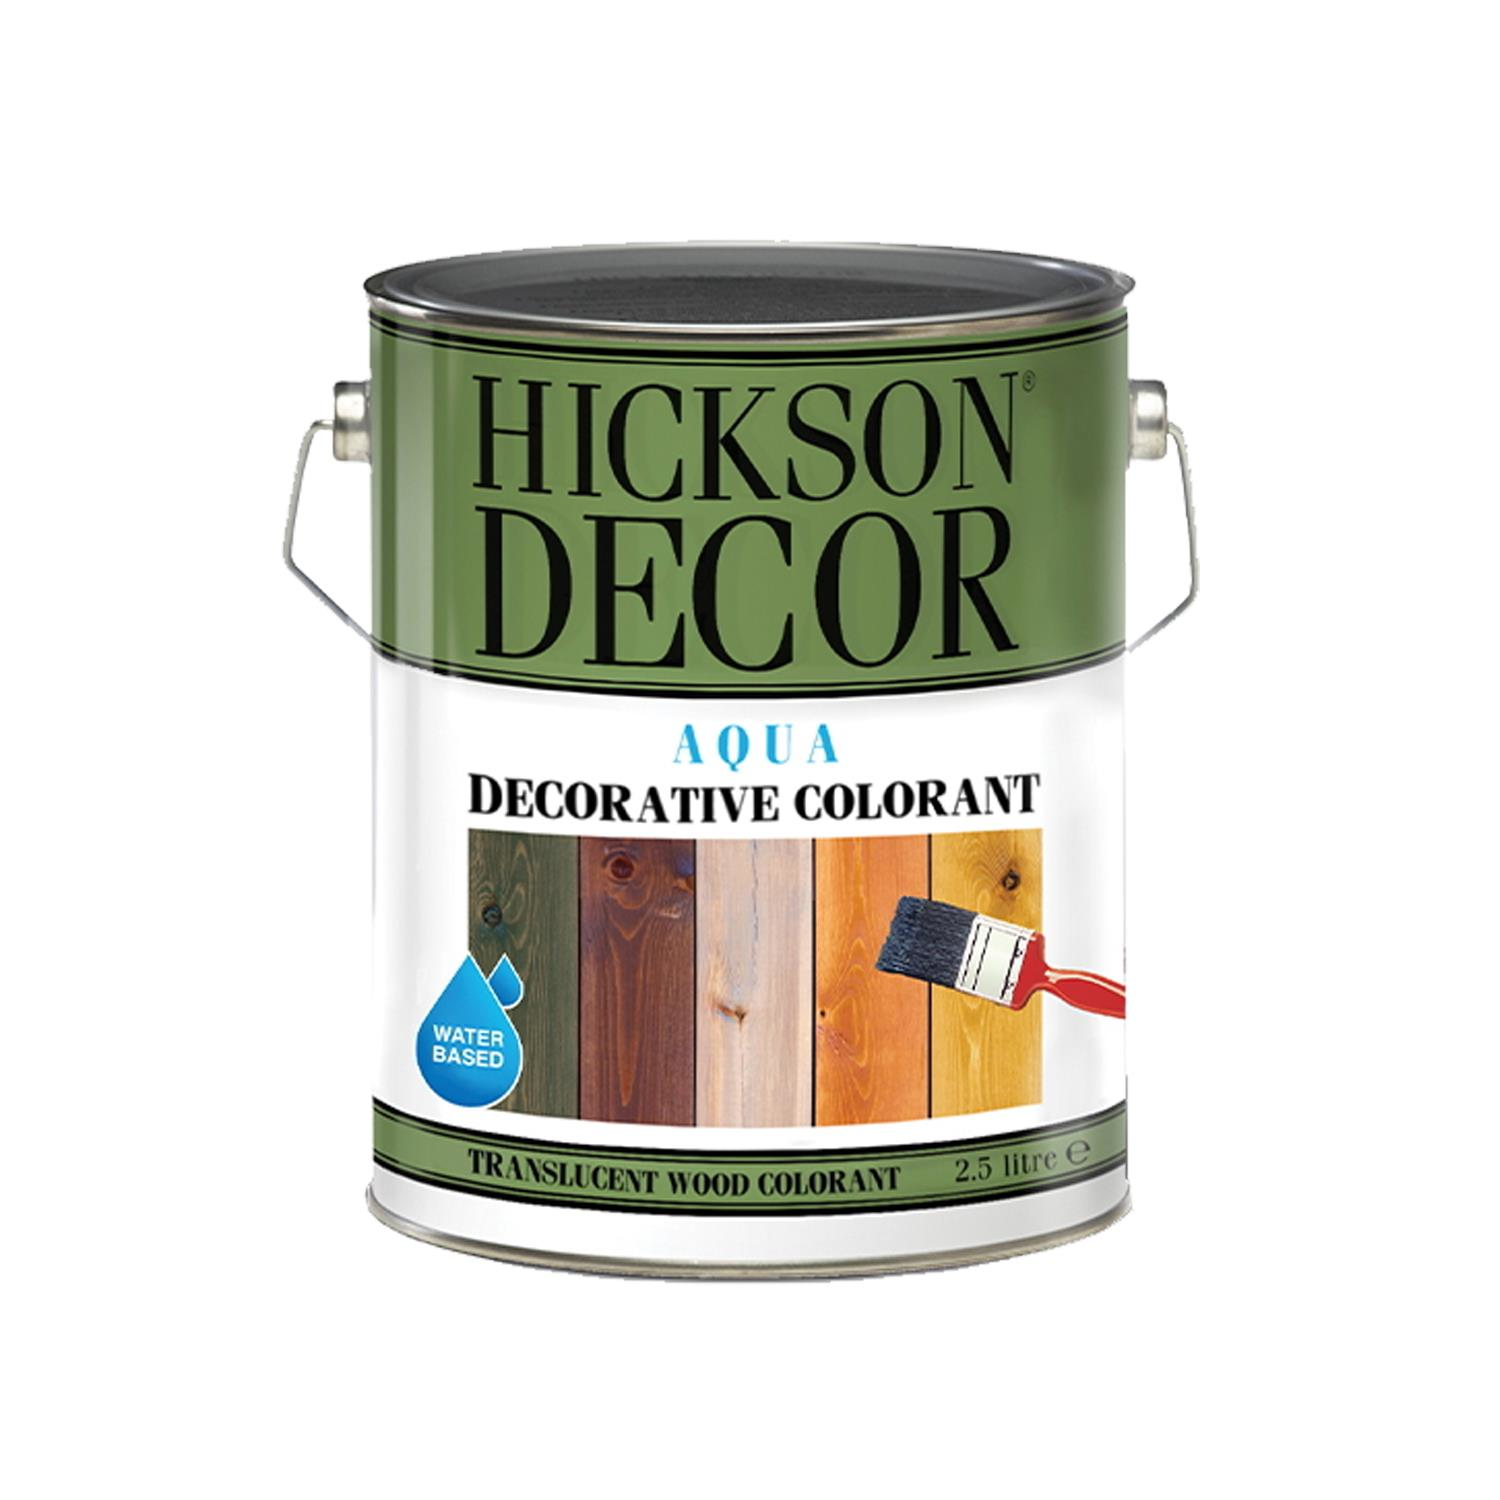 Hickson Decor Aqua Colorant Ahşap Renklendirici - 2,5 lt